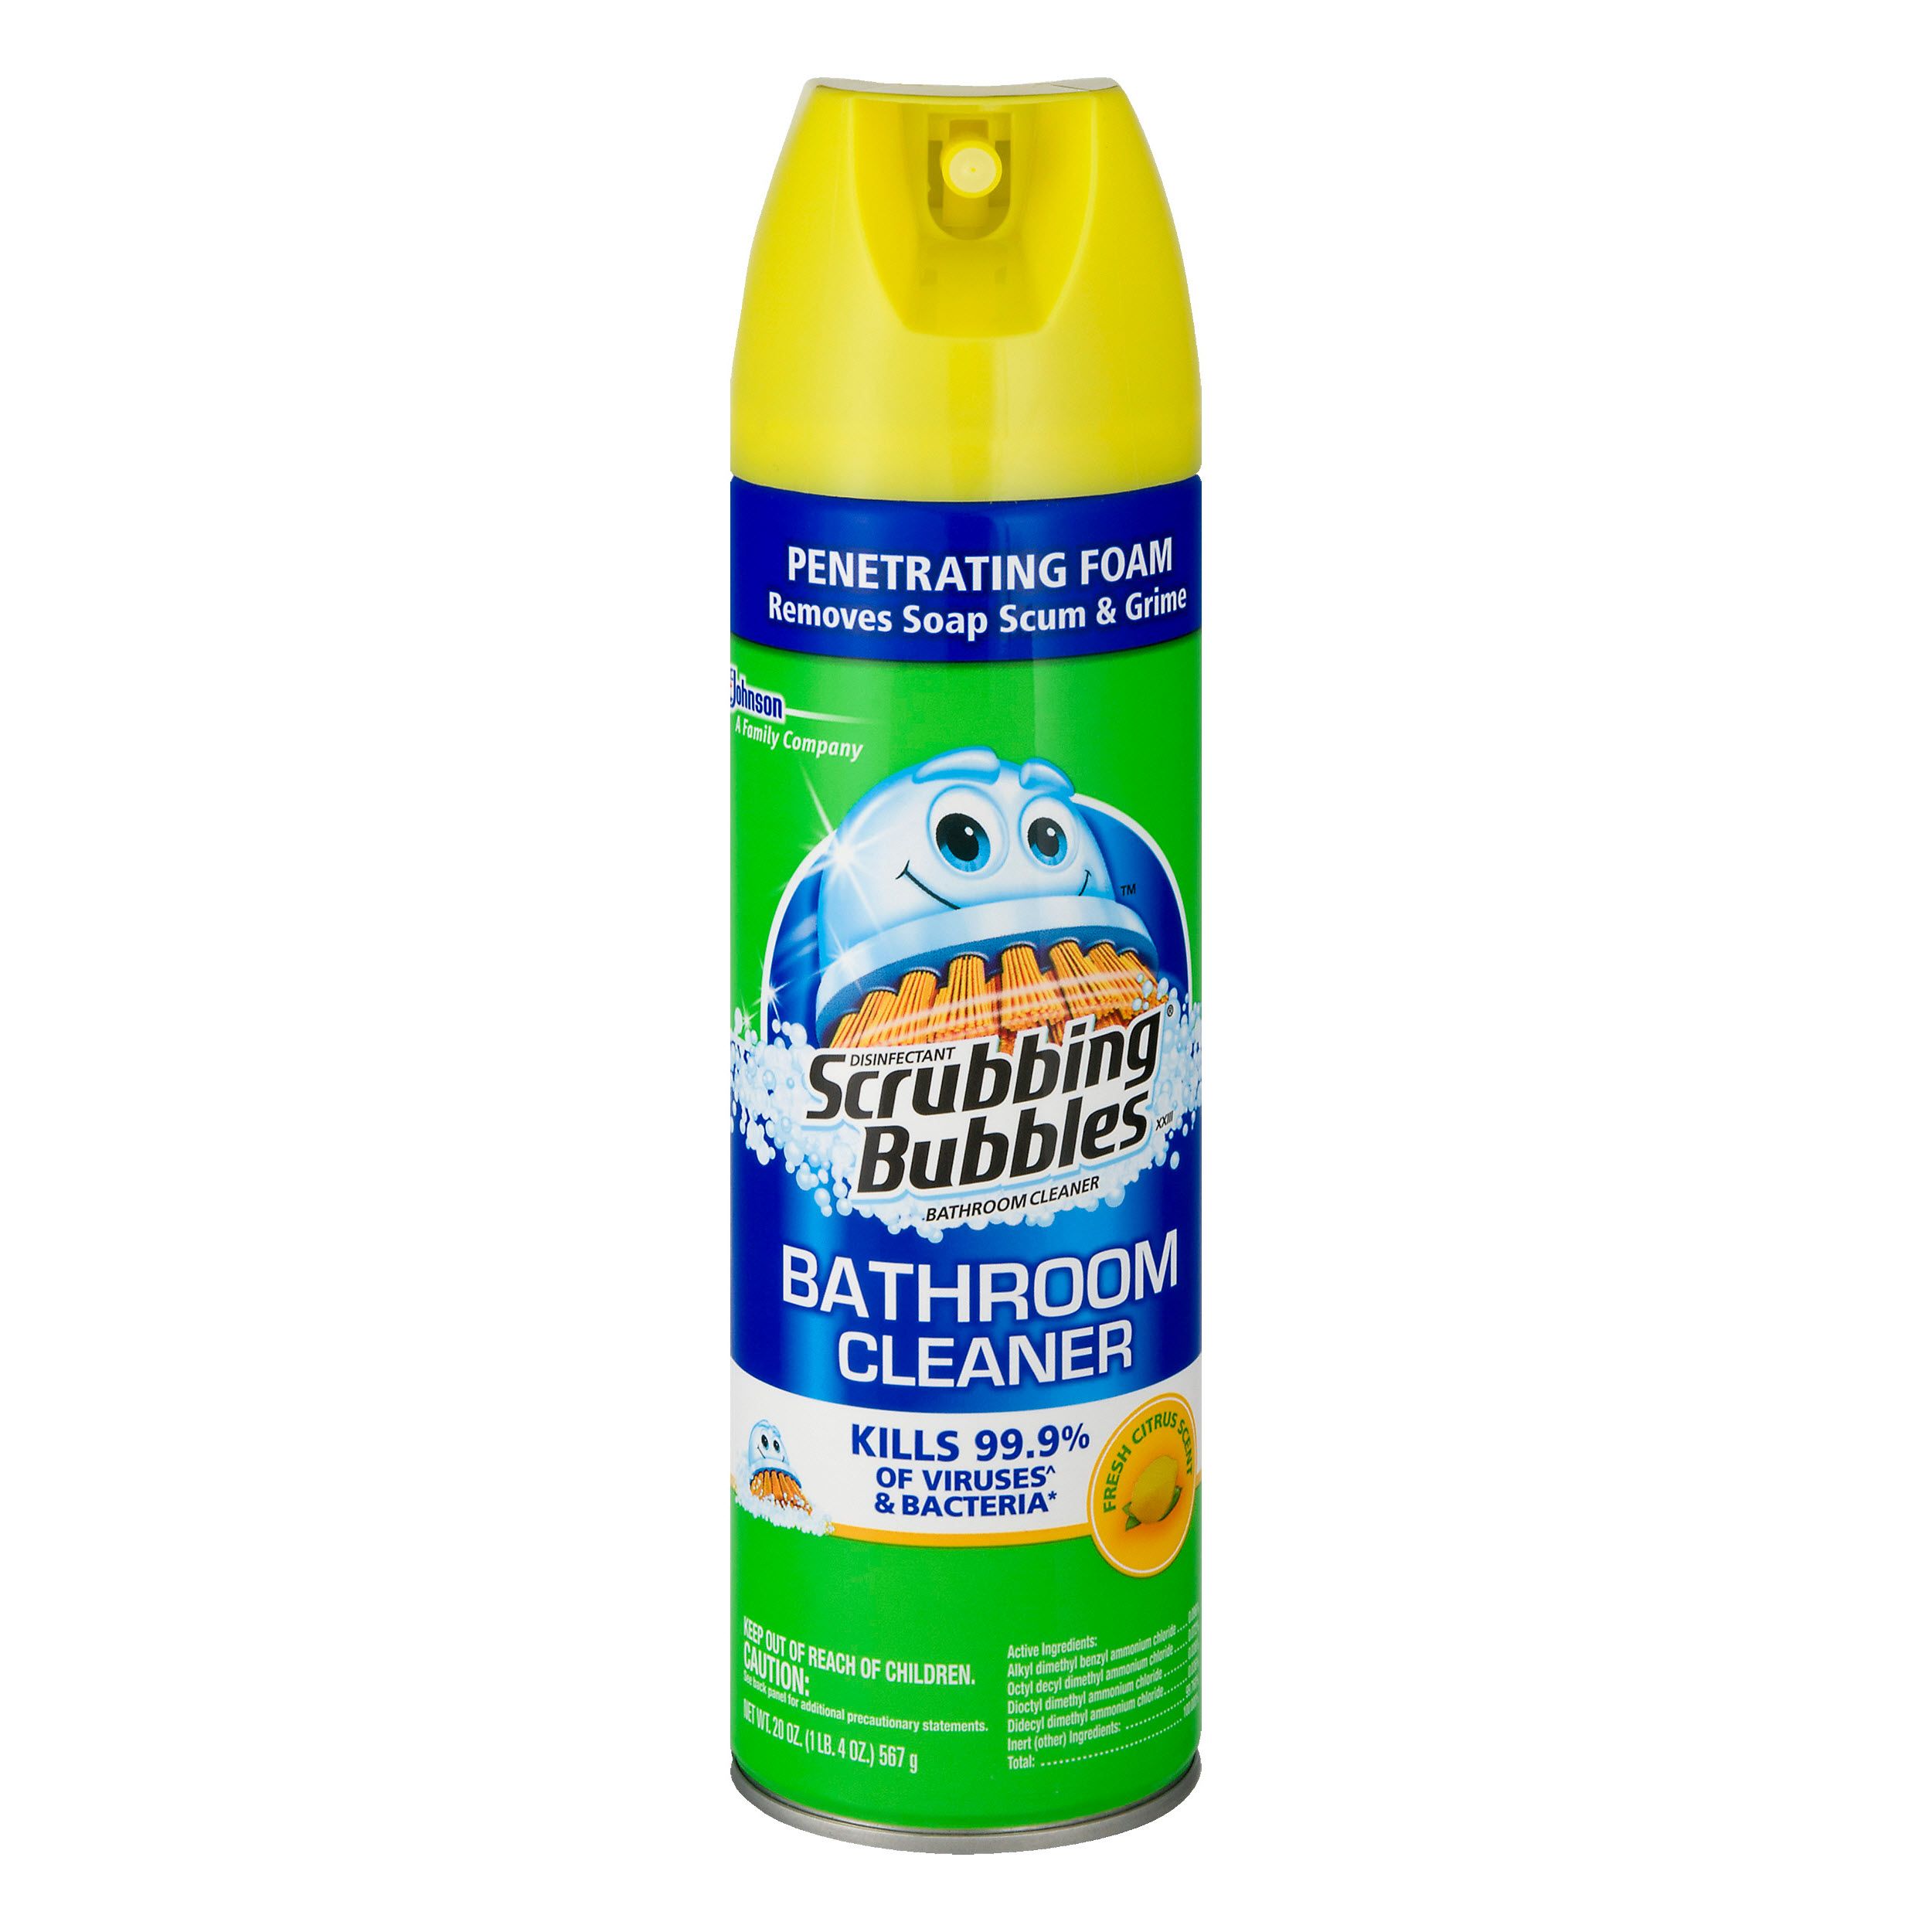 Scrubbing Bubbles Disinfectant Bathroom Cleaner Foam Fresh Citrus Scent, 20 oz on Sale At Dollar General